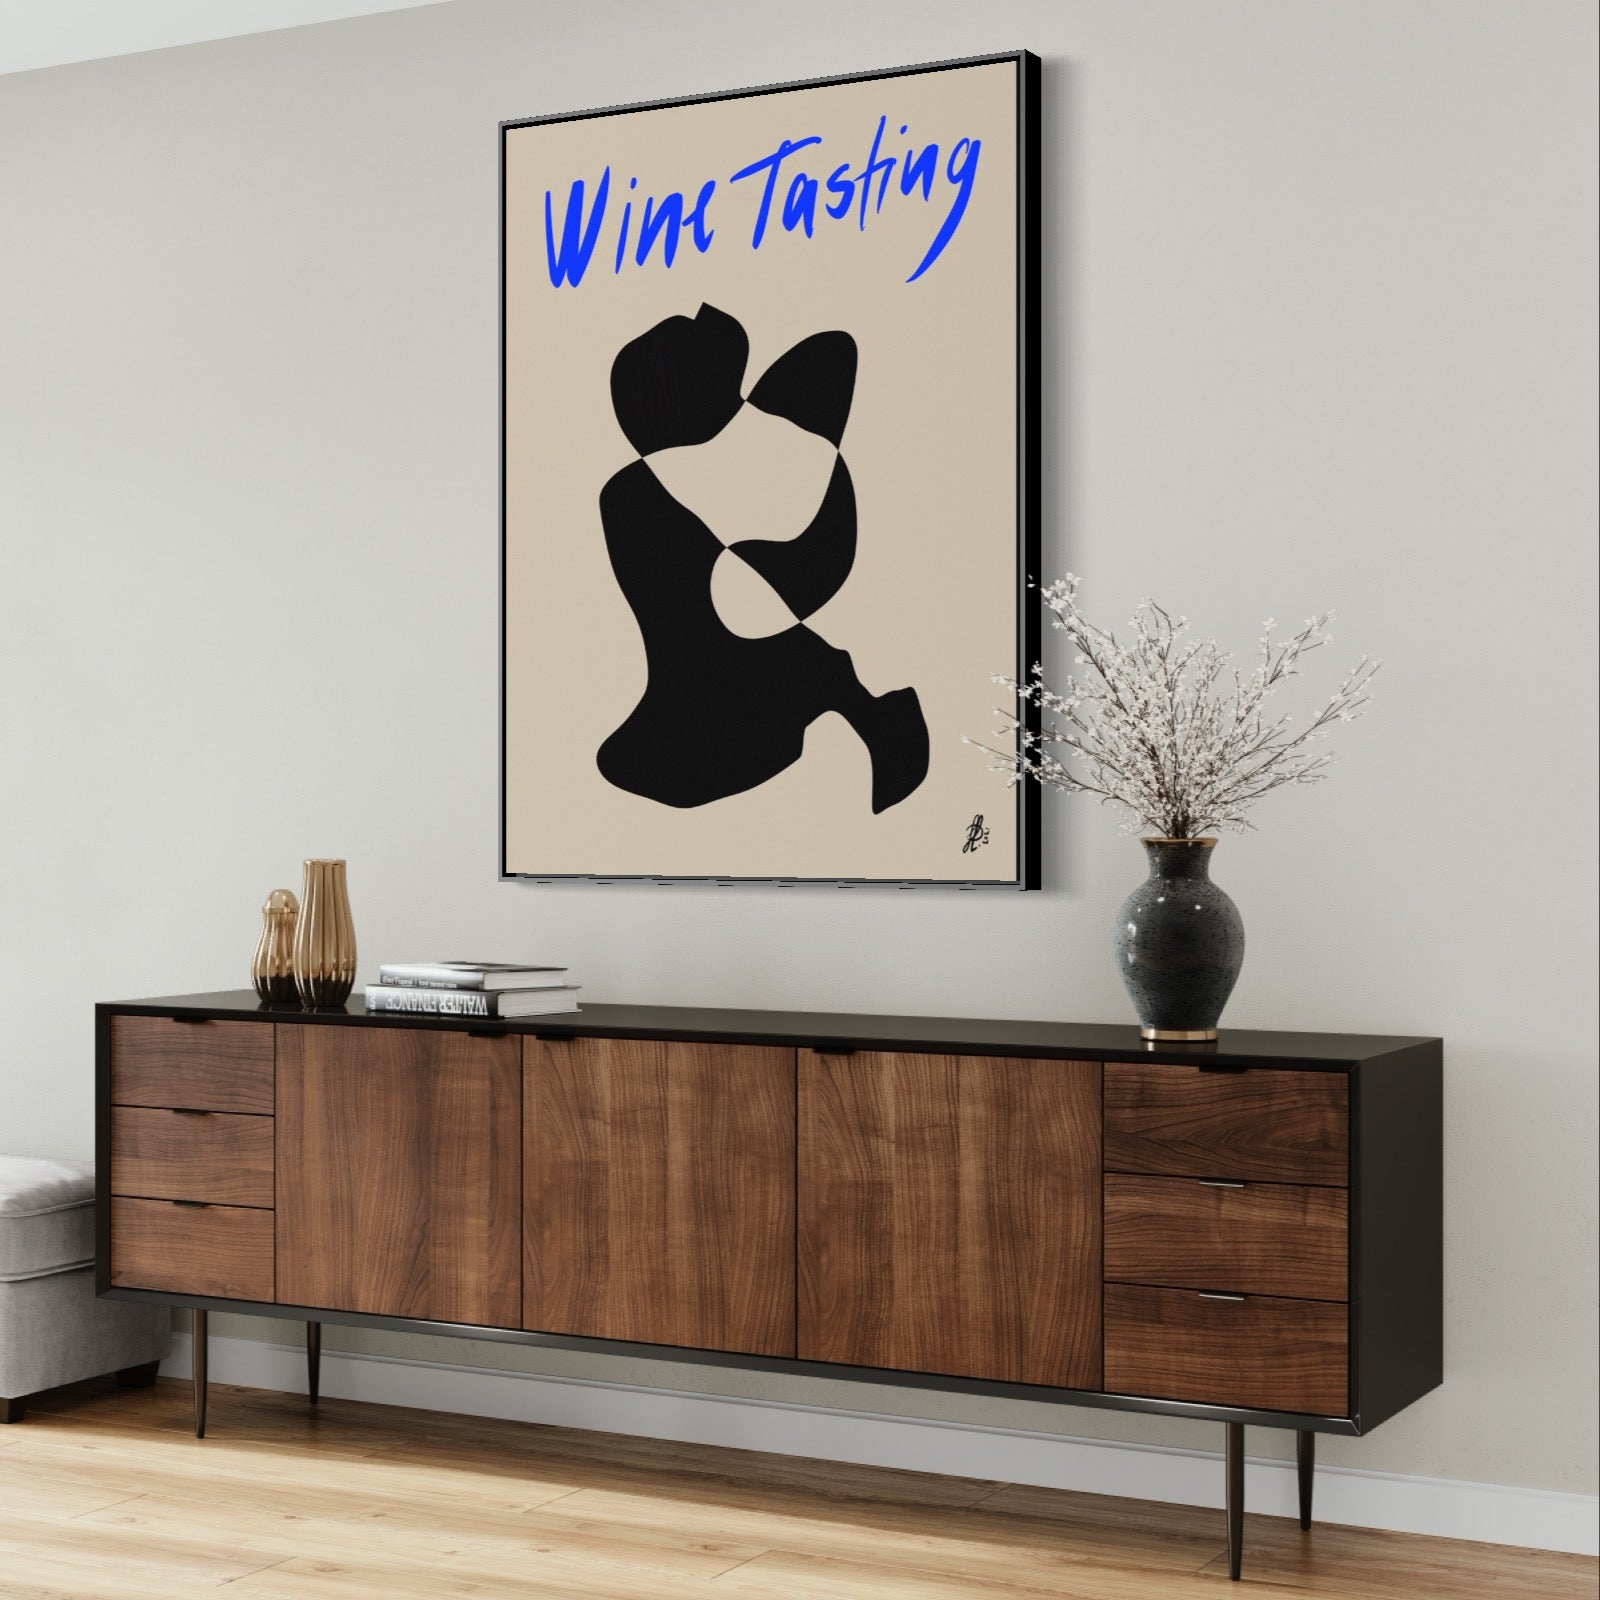 Poster: "Wine Tasting #1"